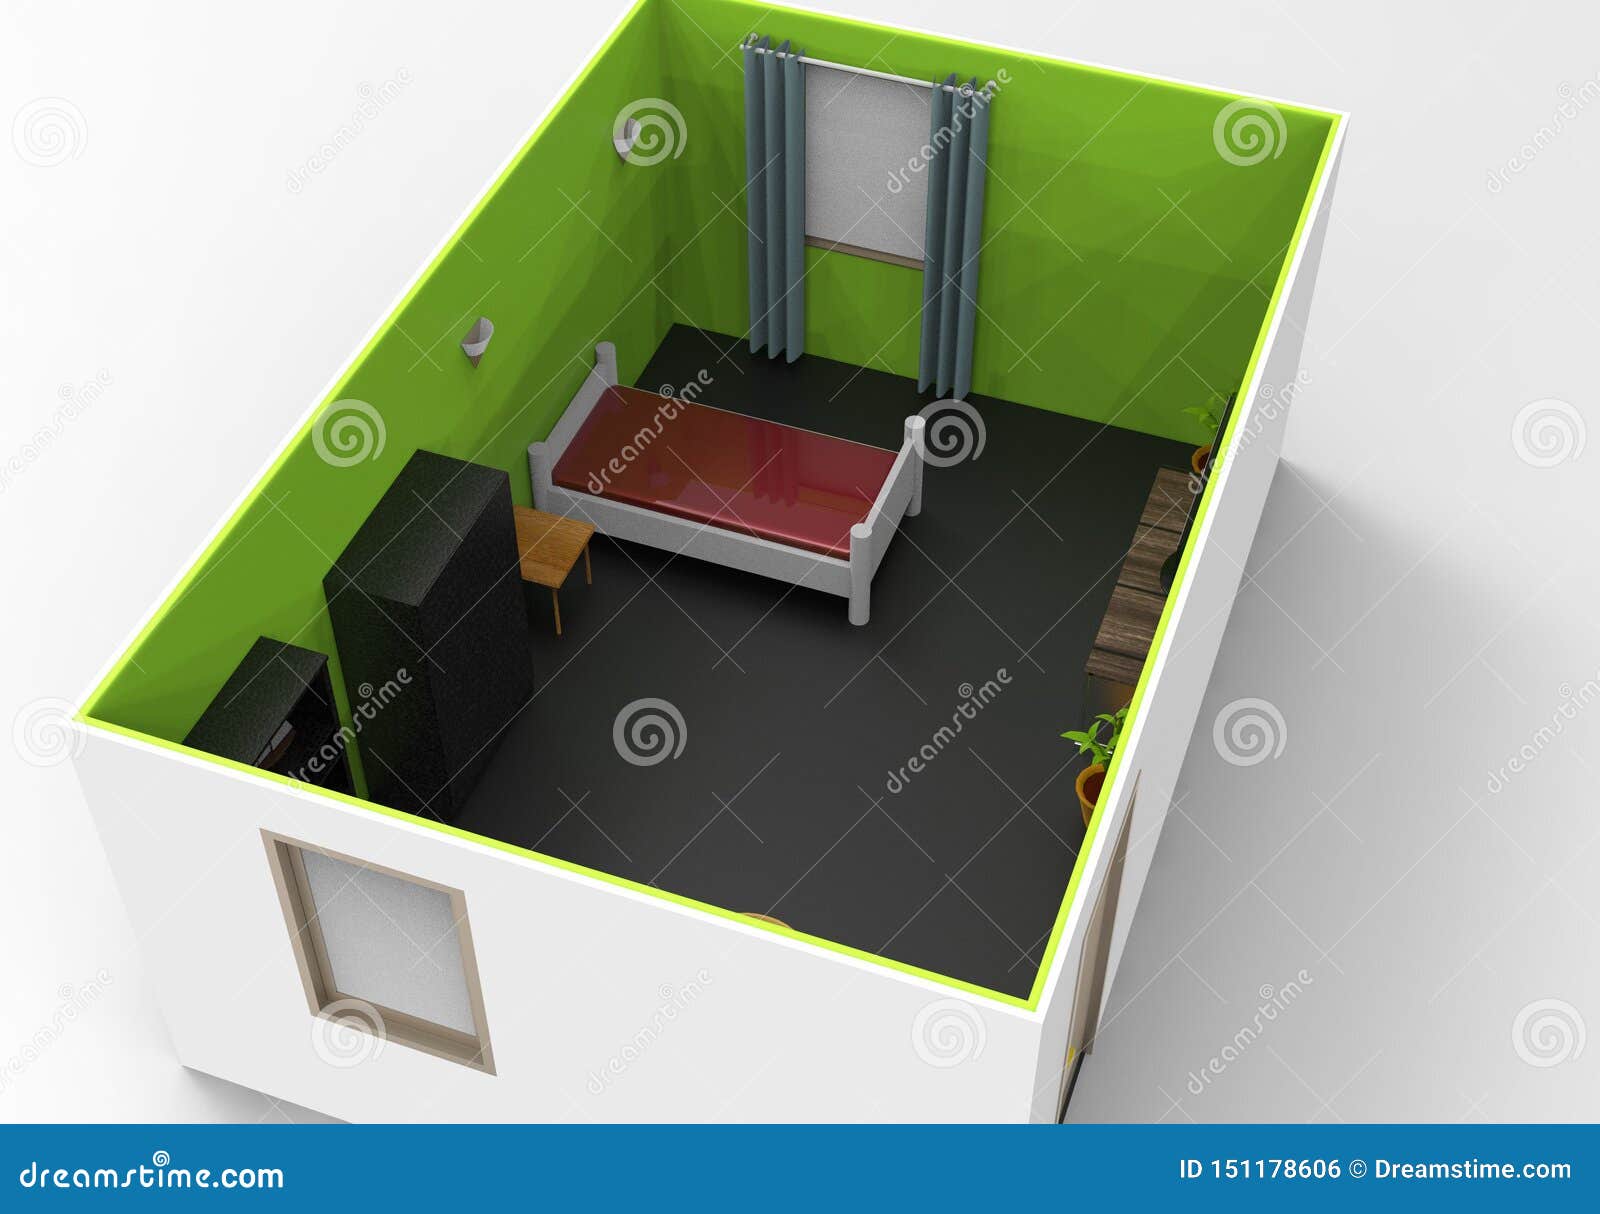 Simple Interior Design For Cozy Room Stock Illustration